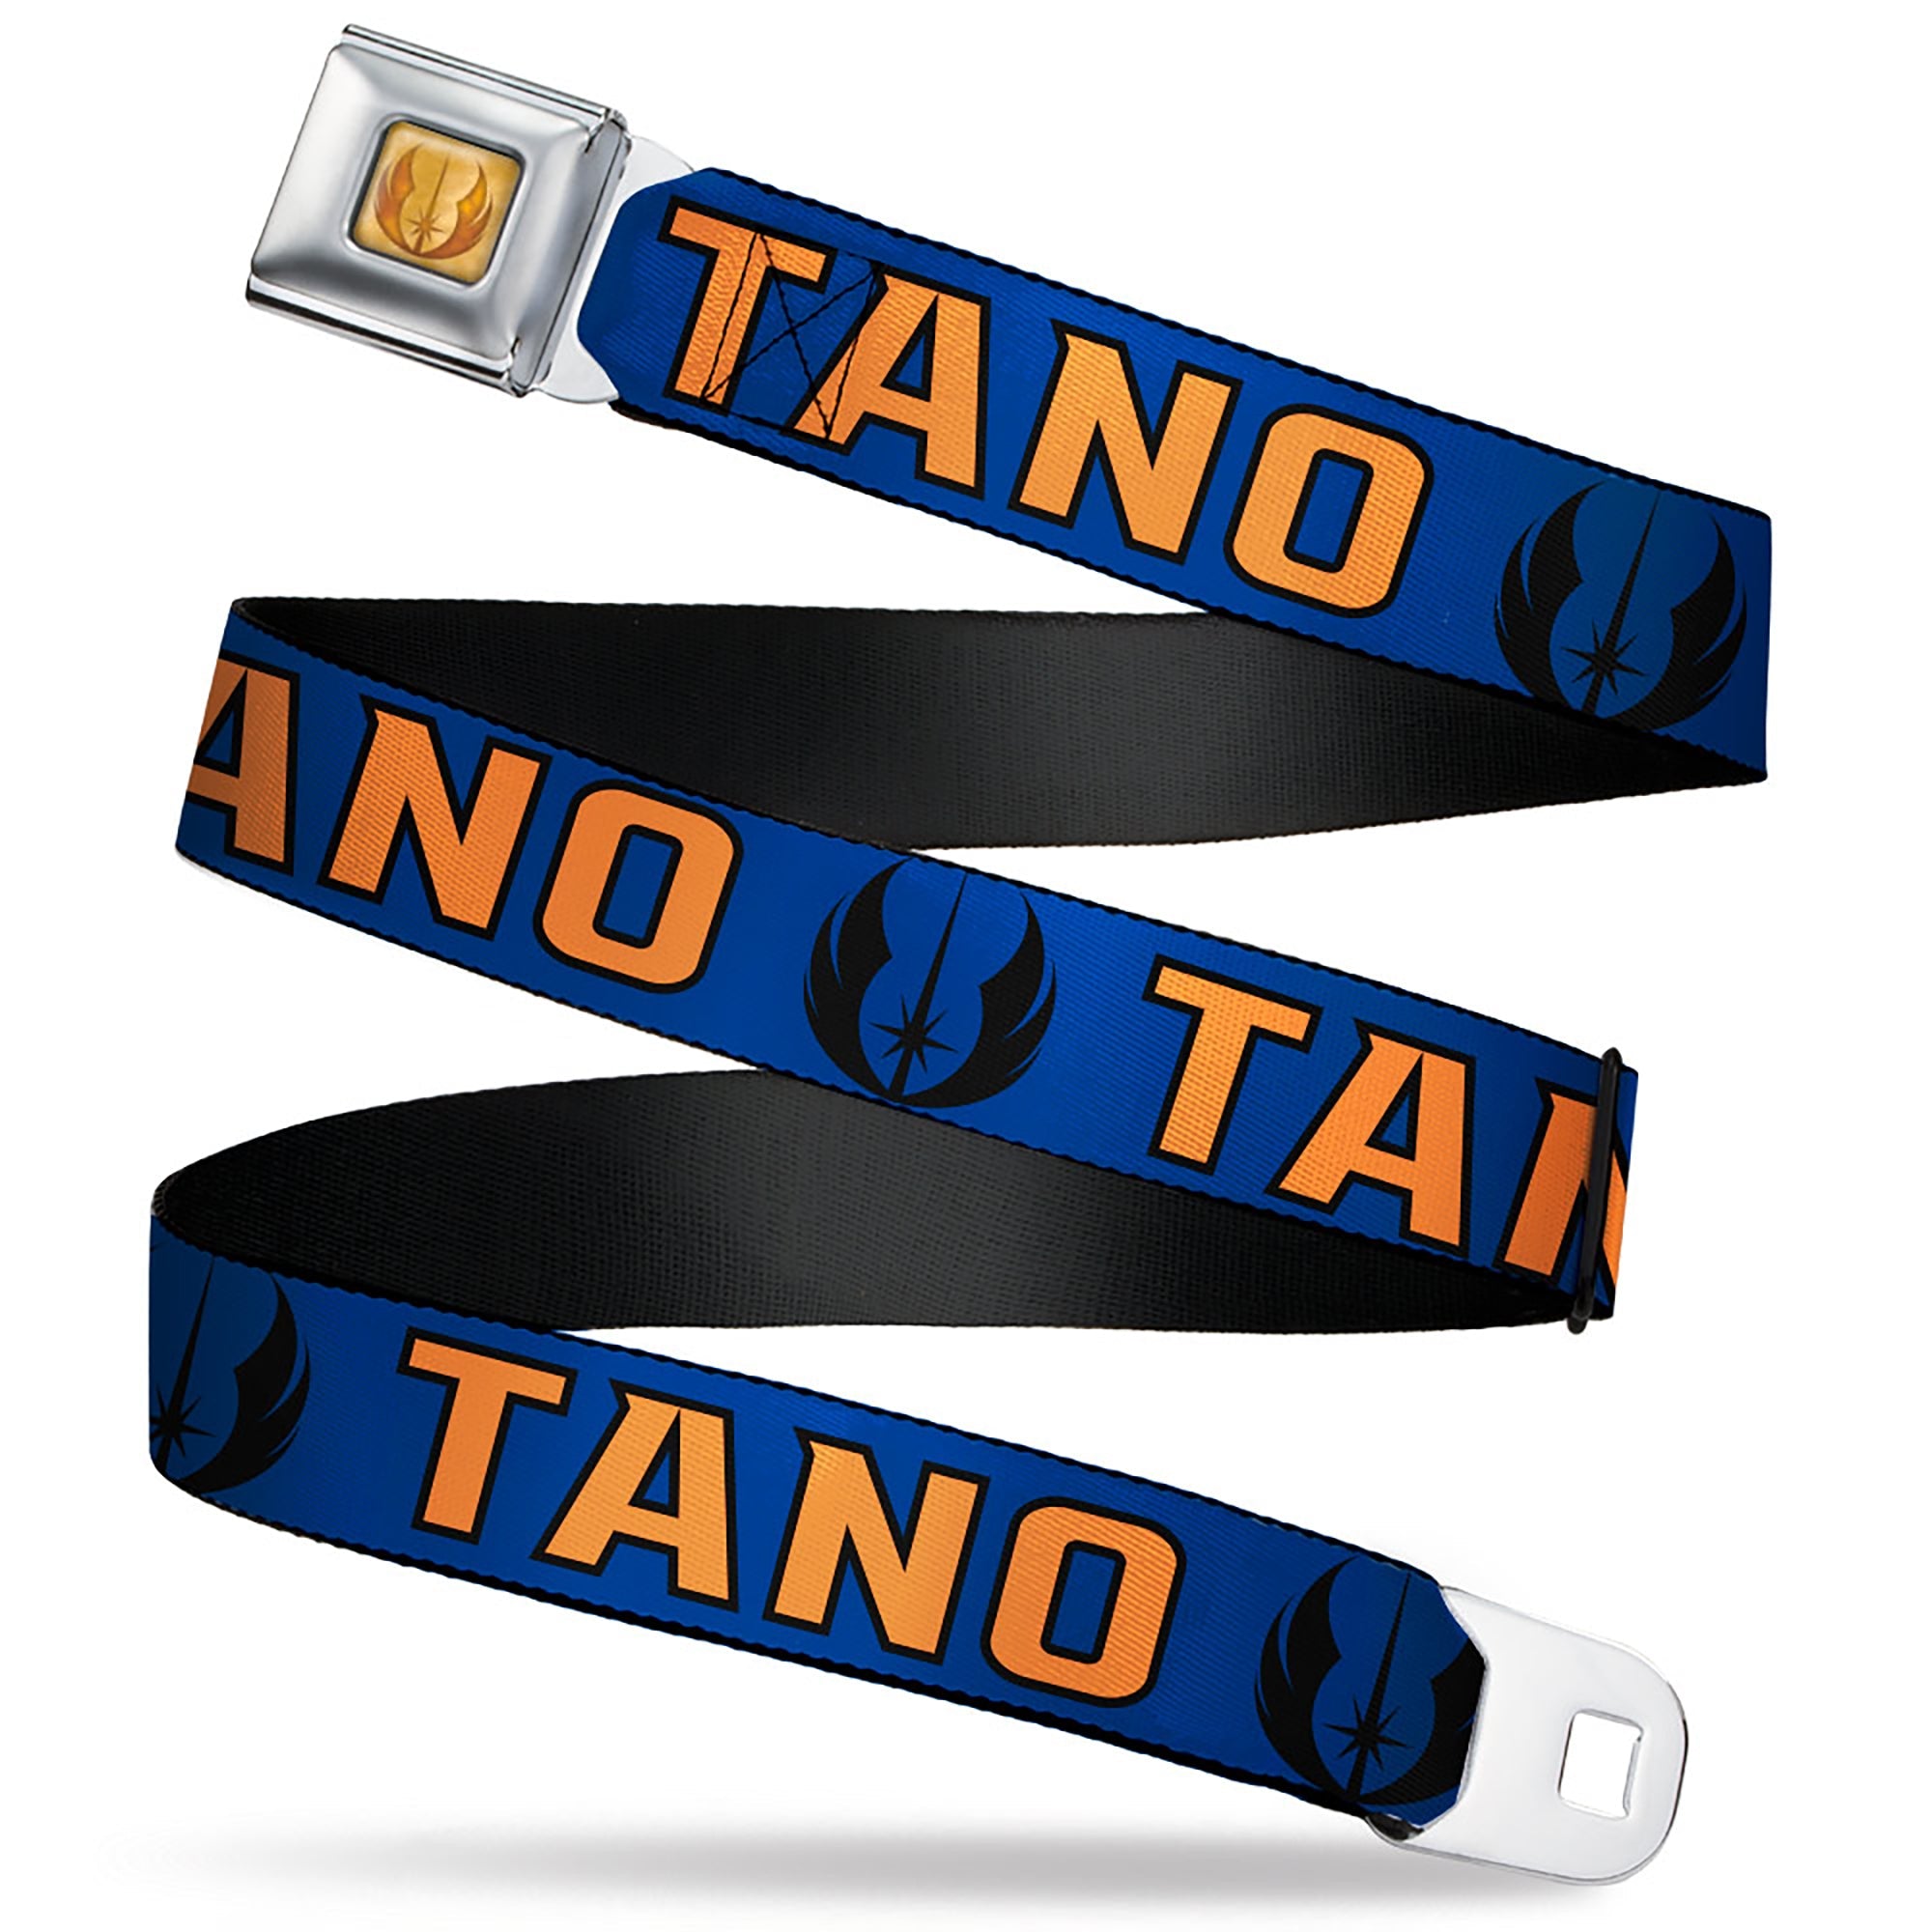 Star Wars Jedi Order Insignia Full Color Tans Seatbelt Belt - Star Wars Jedi Order Insignia/TANO Text Blues/Orange Webbing